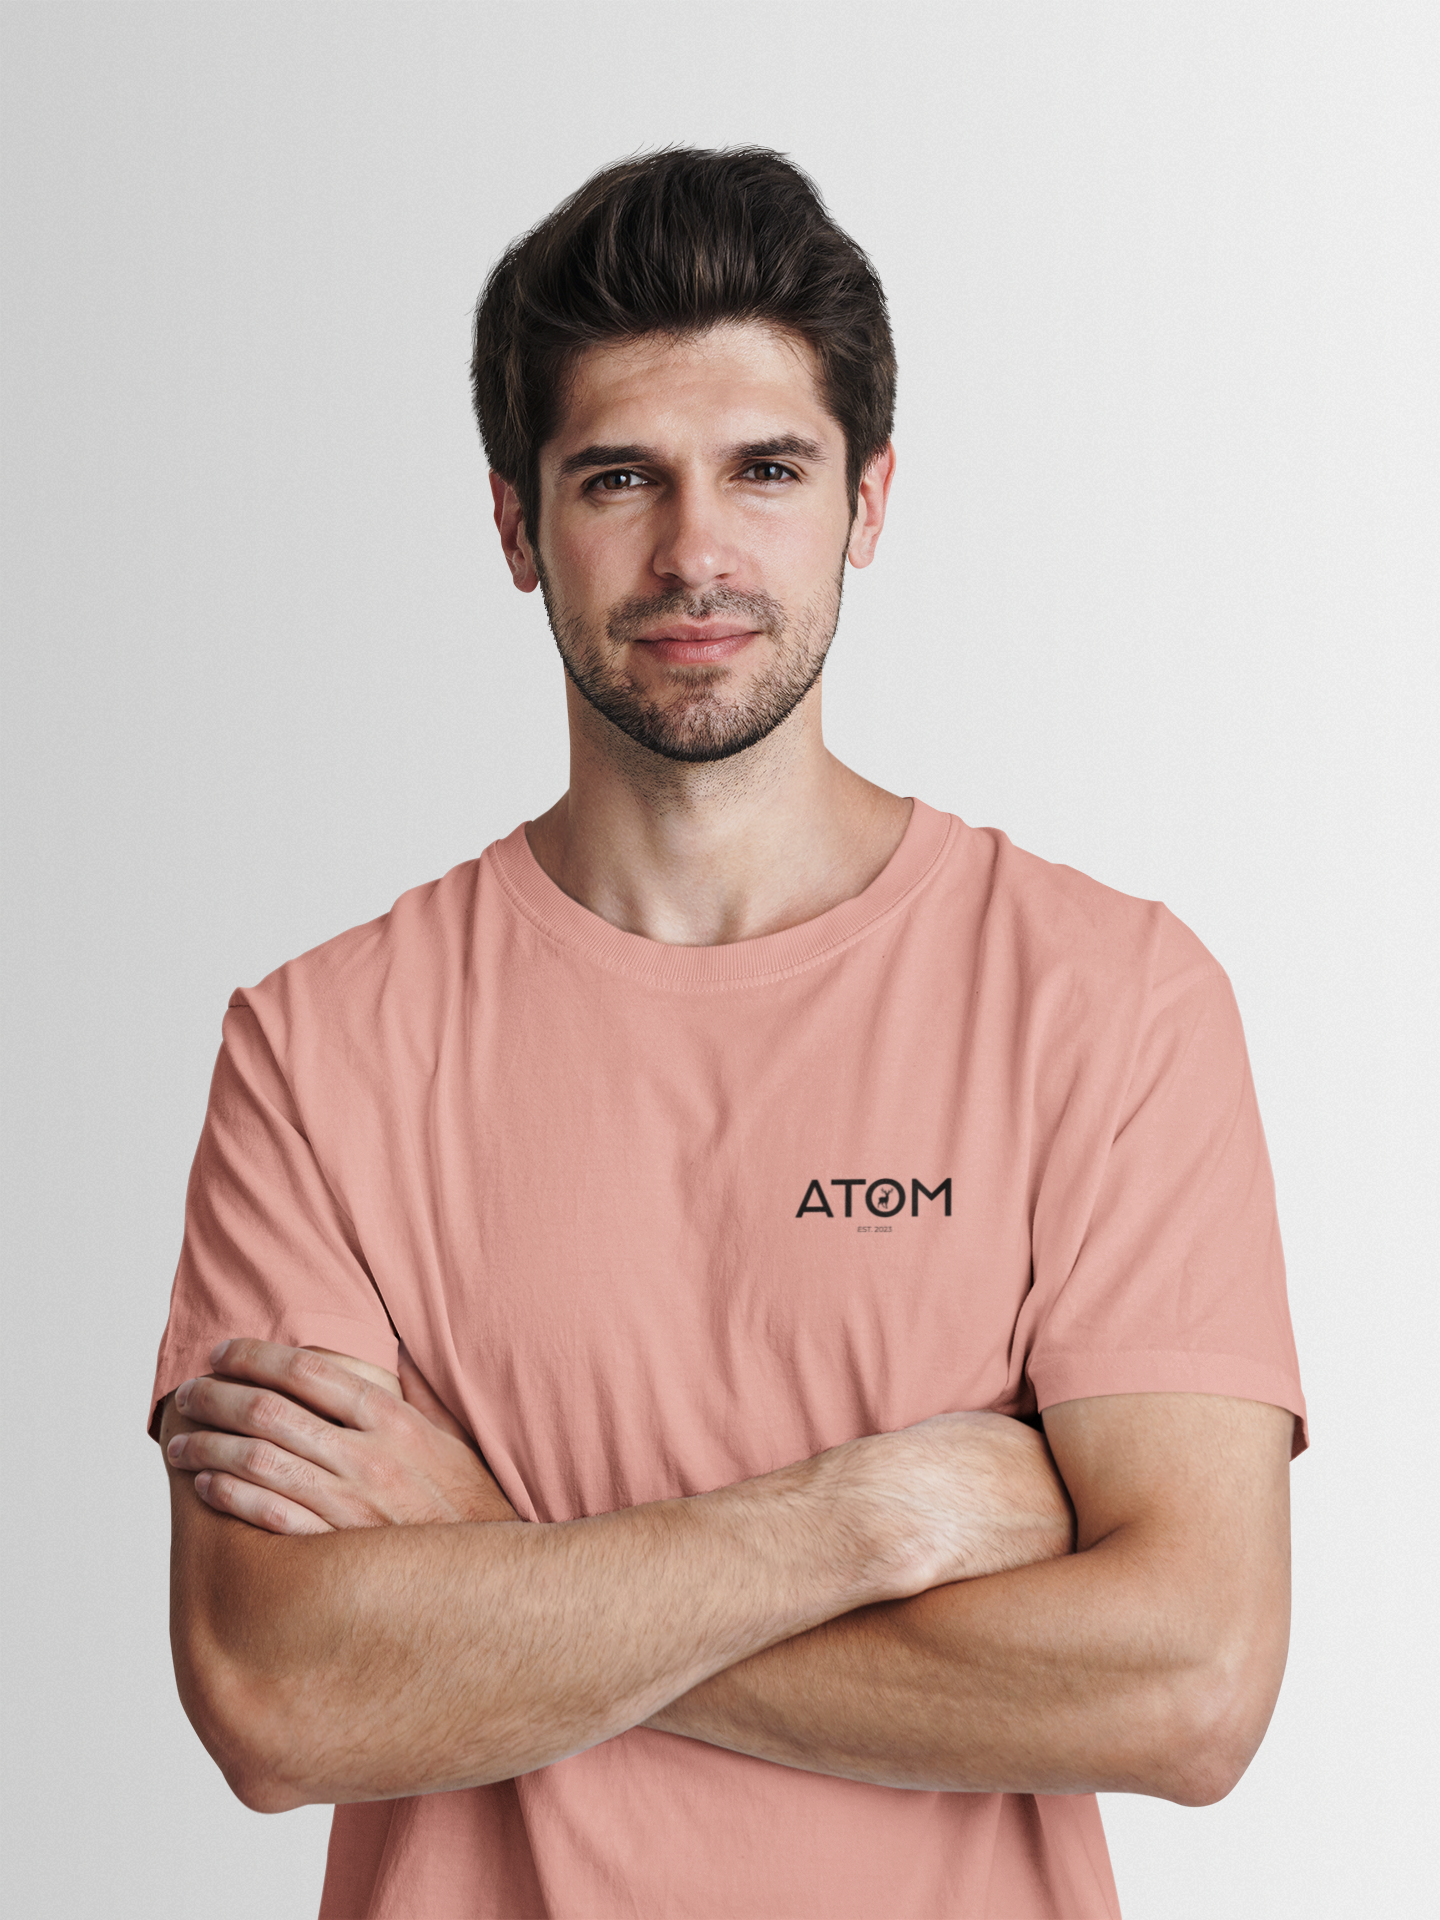 ATOM Logo Basic Peach Round Neck T-Shirt for Men.